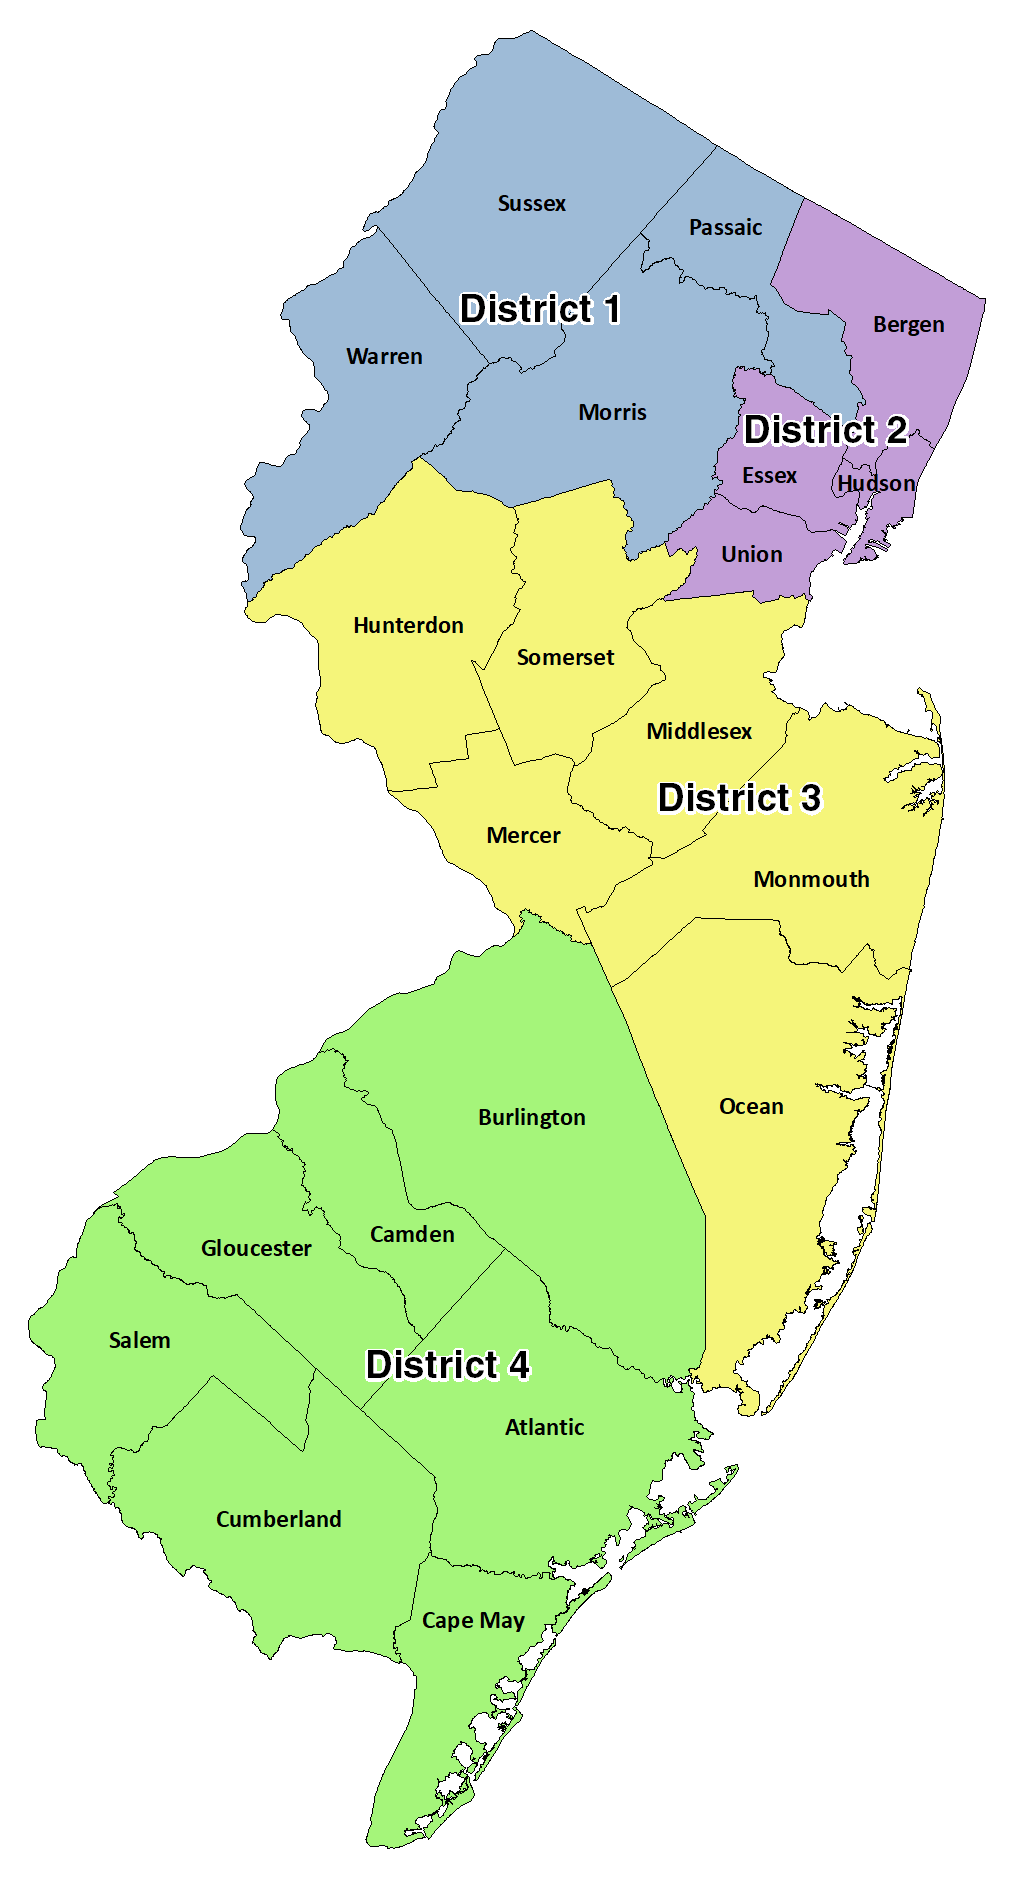 DistrictMap DistrictsOnly crop